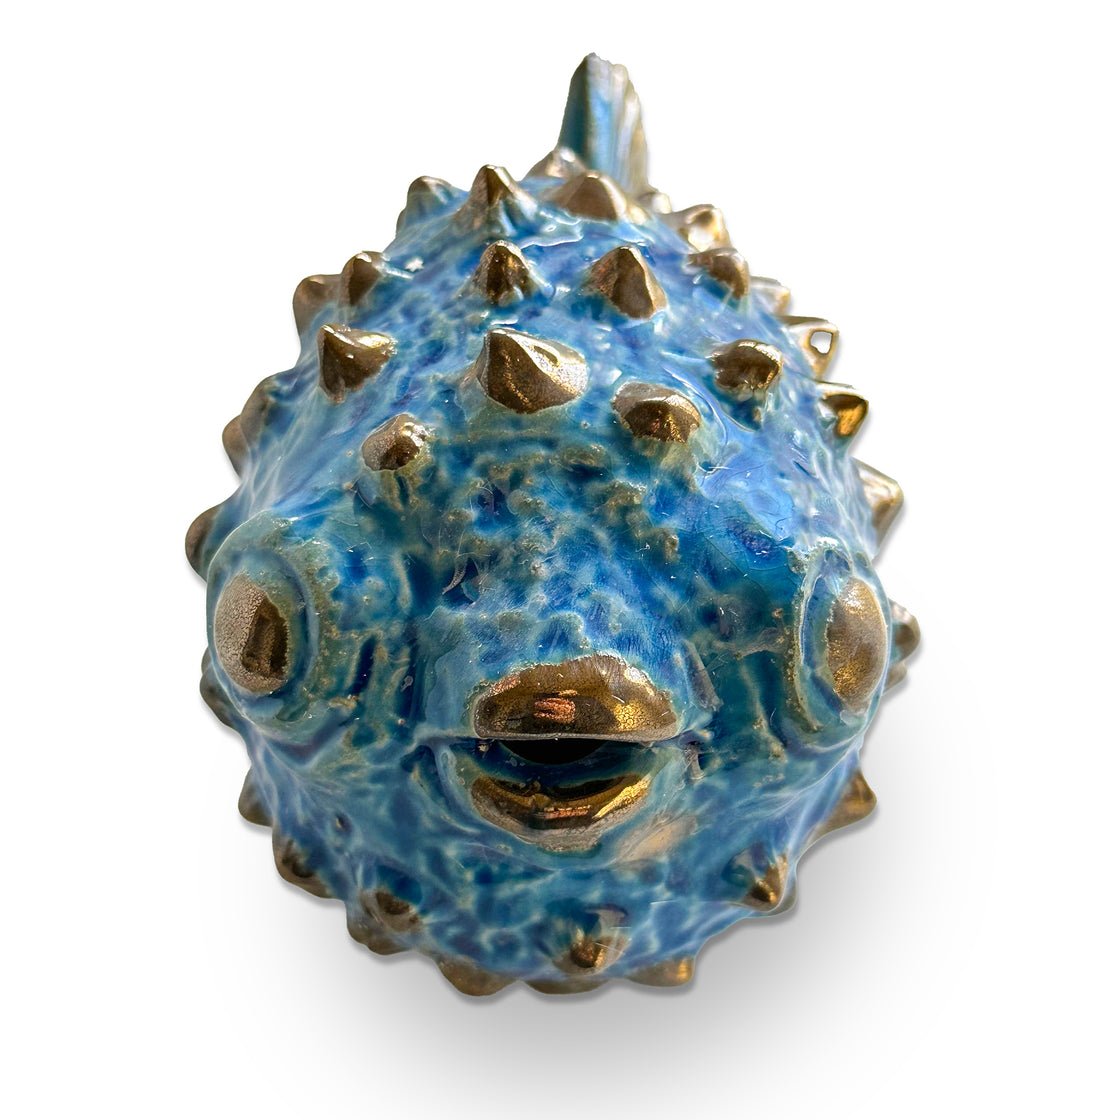 deep royal blue and gold ceramic pufferfish - great ocean-inspired beach décor by rengöra